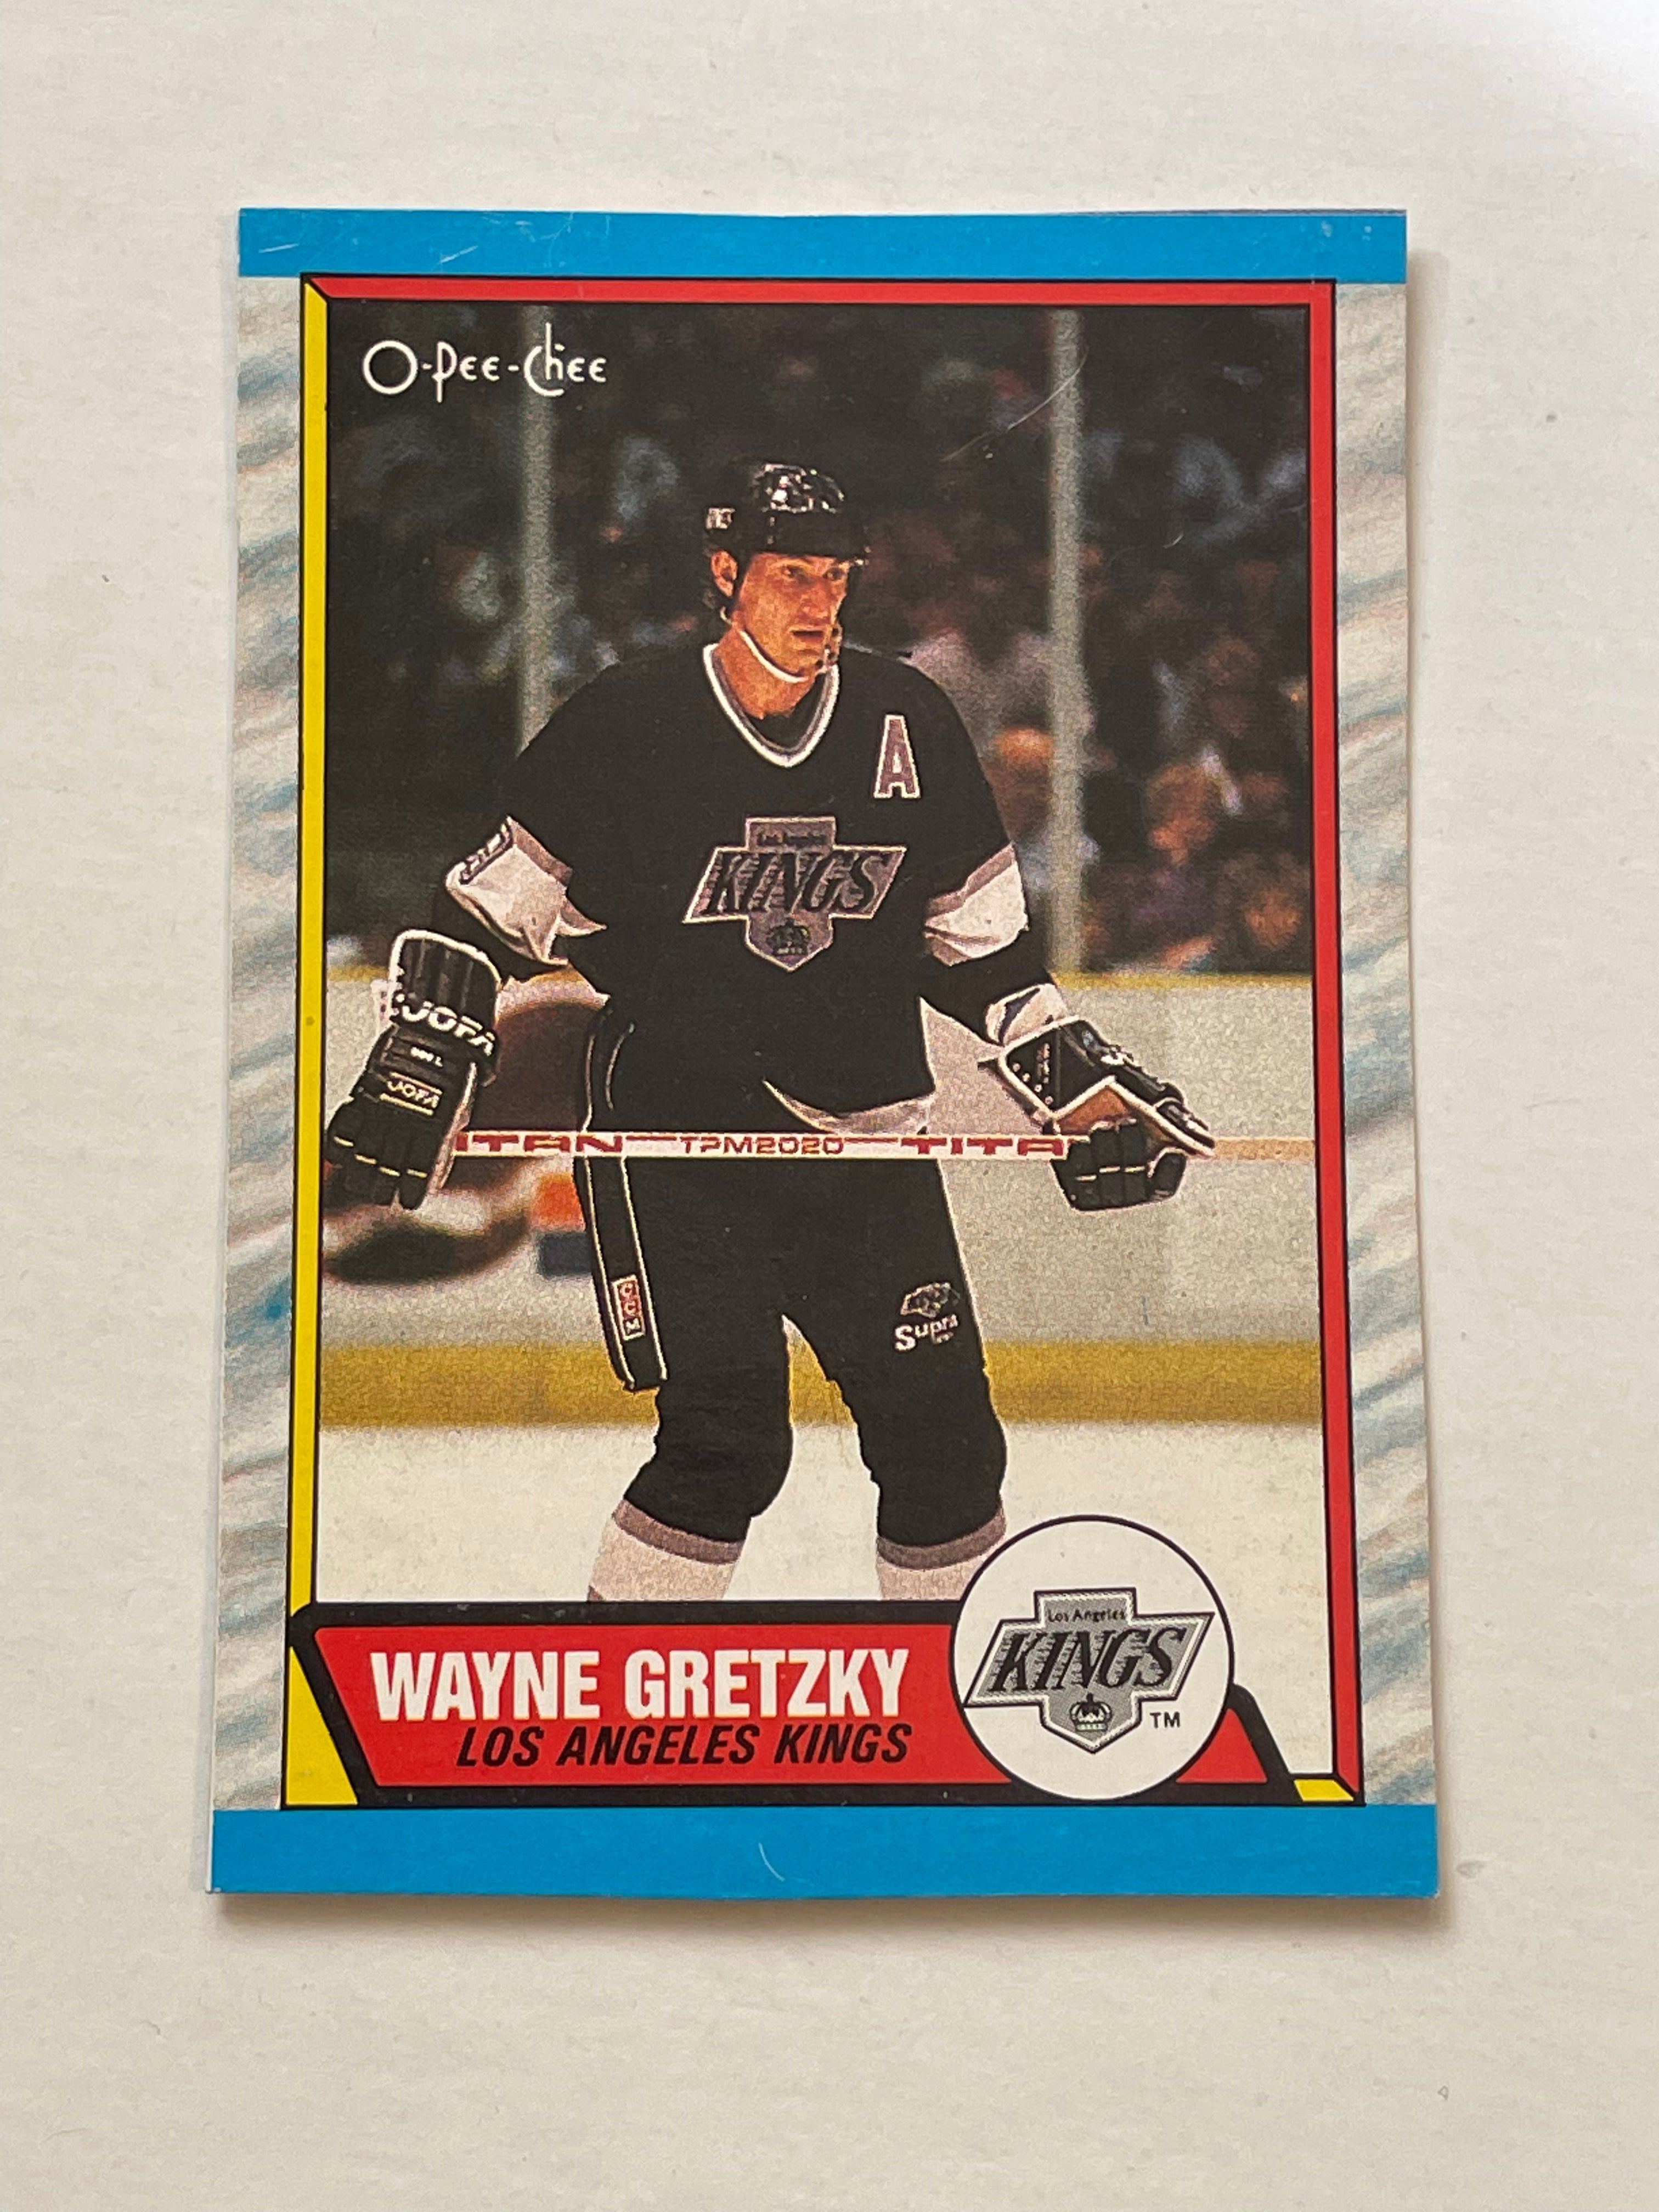 Wayne Gretzky opc E box bottom high grade hockey card 1989